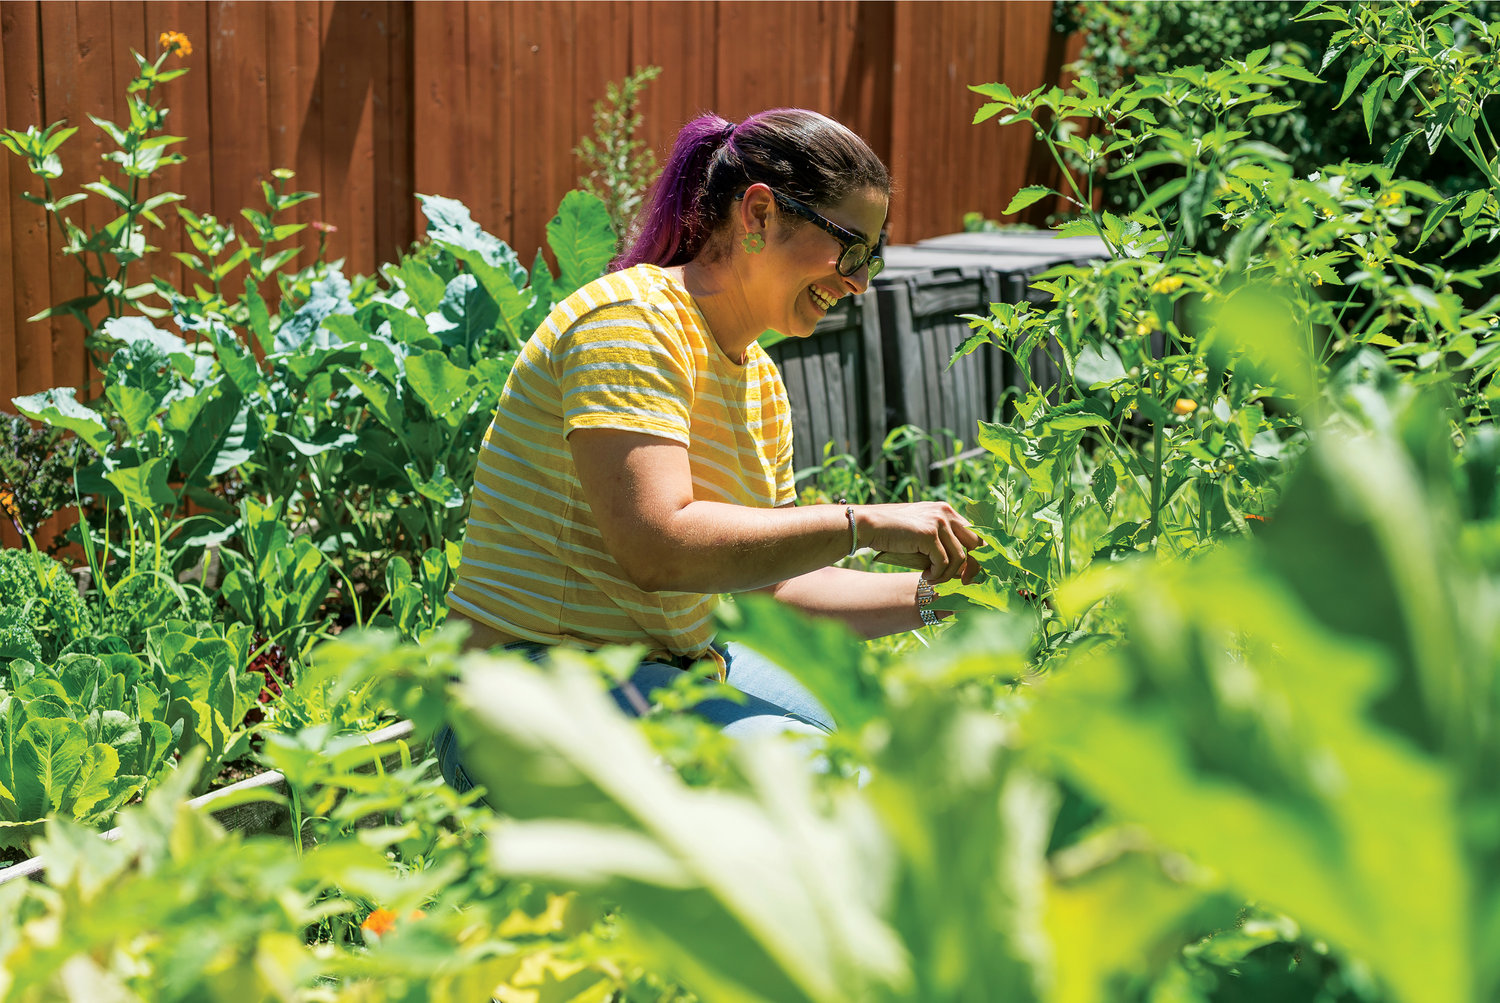 Pagán tending her home garden